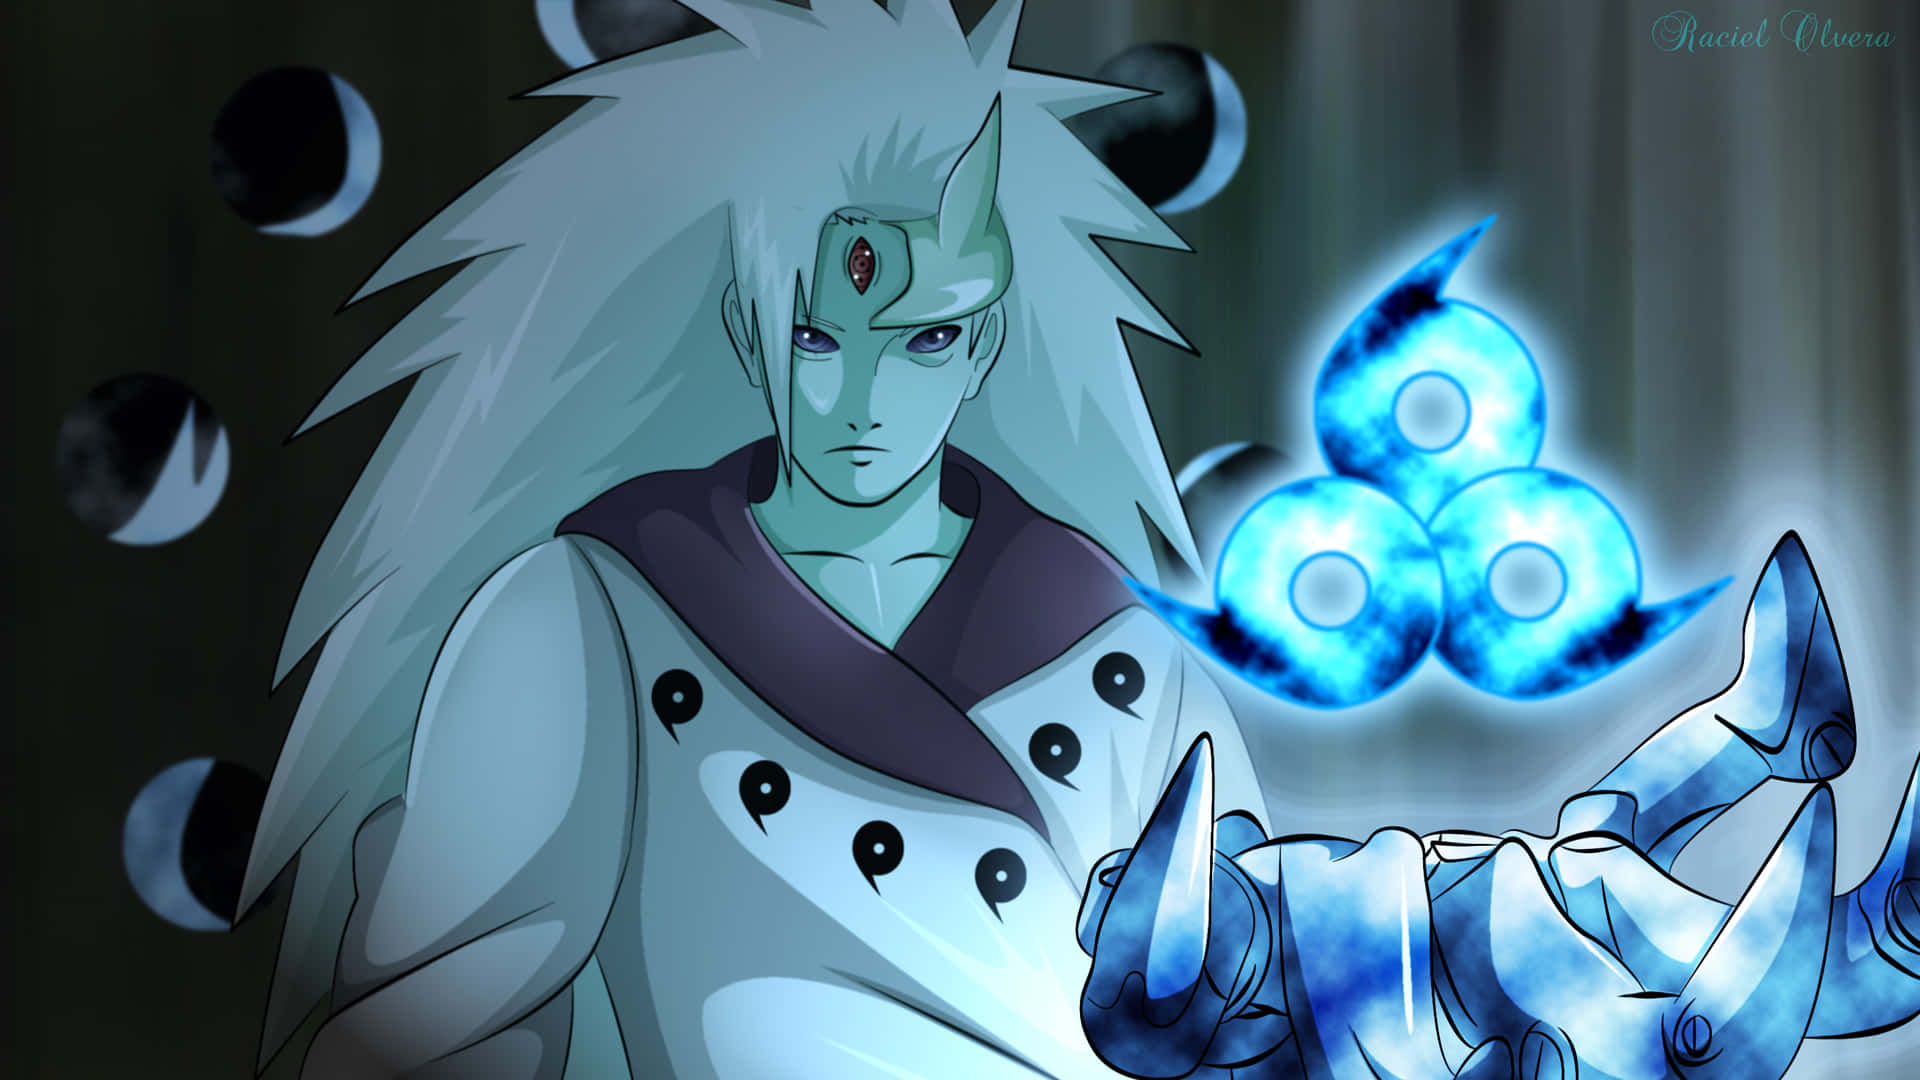 Madara Uchiha, villain of the Naruto world with immense power. Wallpaper